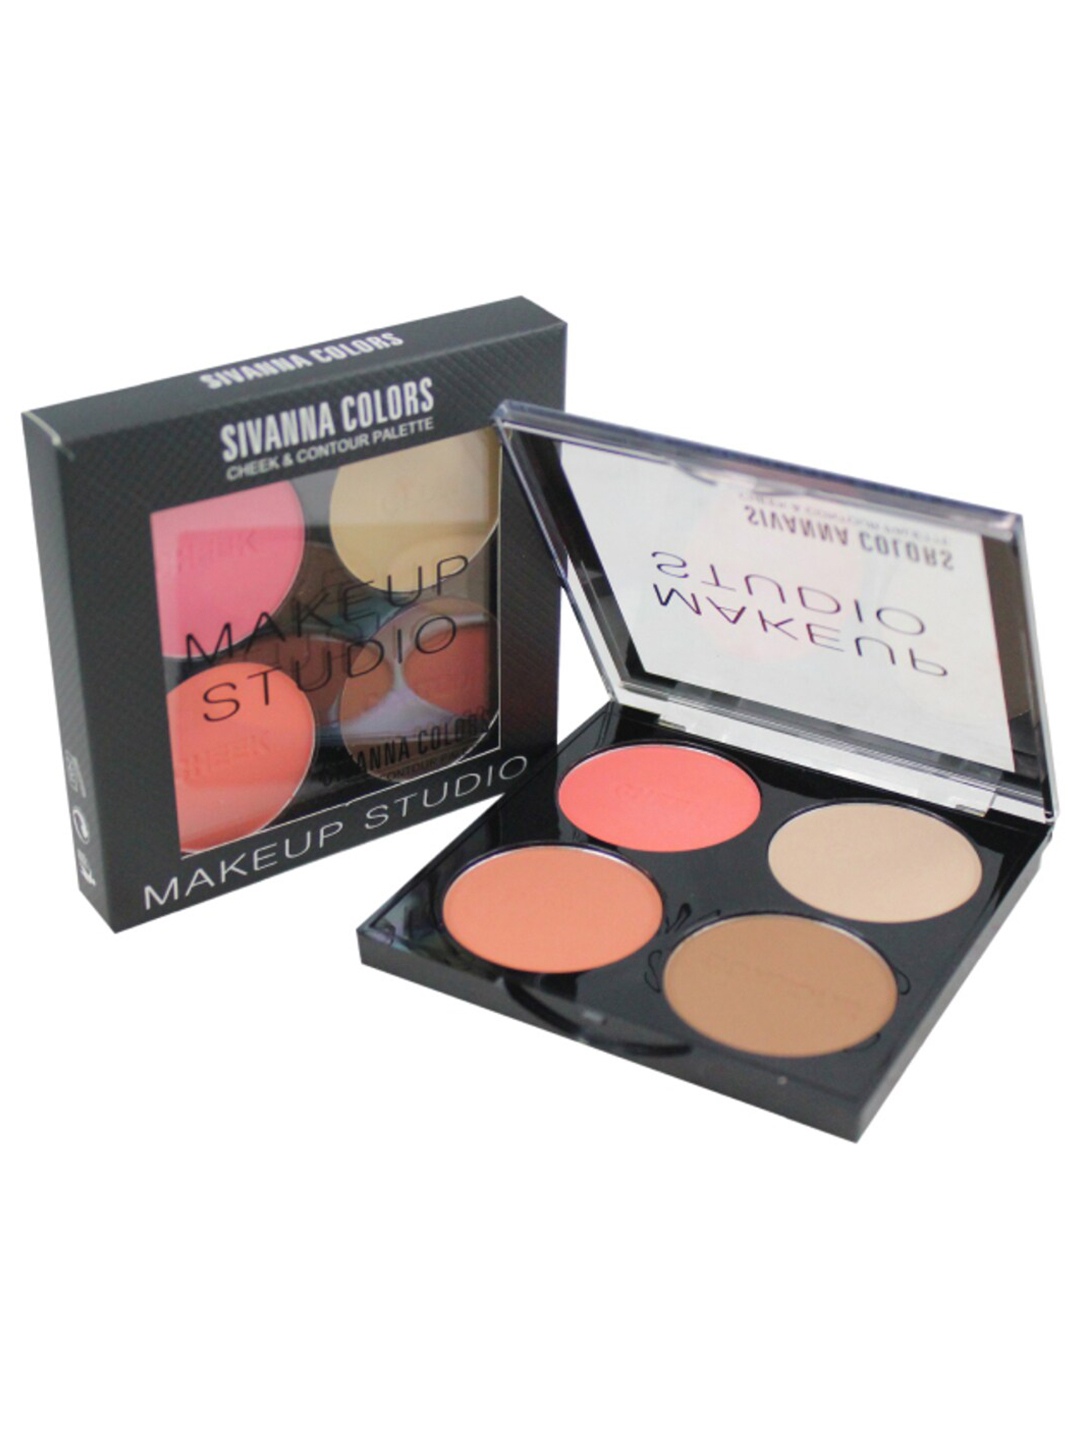 

Sivanna Colors Make-Up Studio Cheek & Contour Palette - HF365 01, Multi